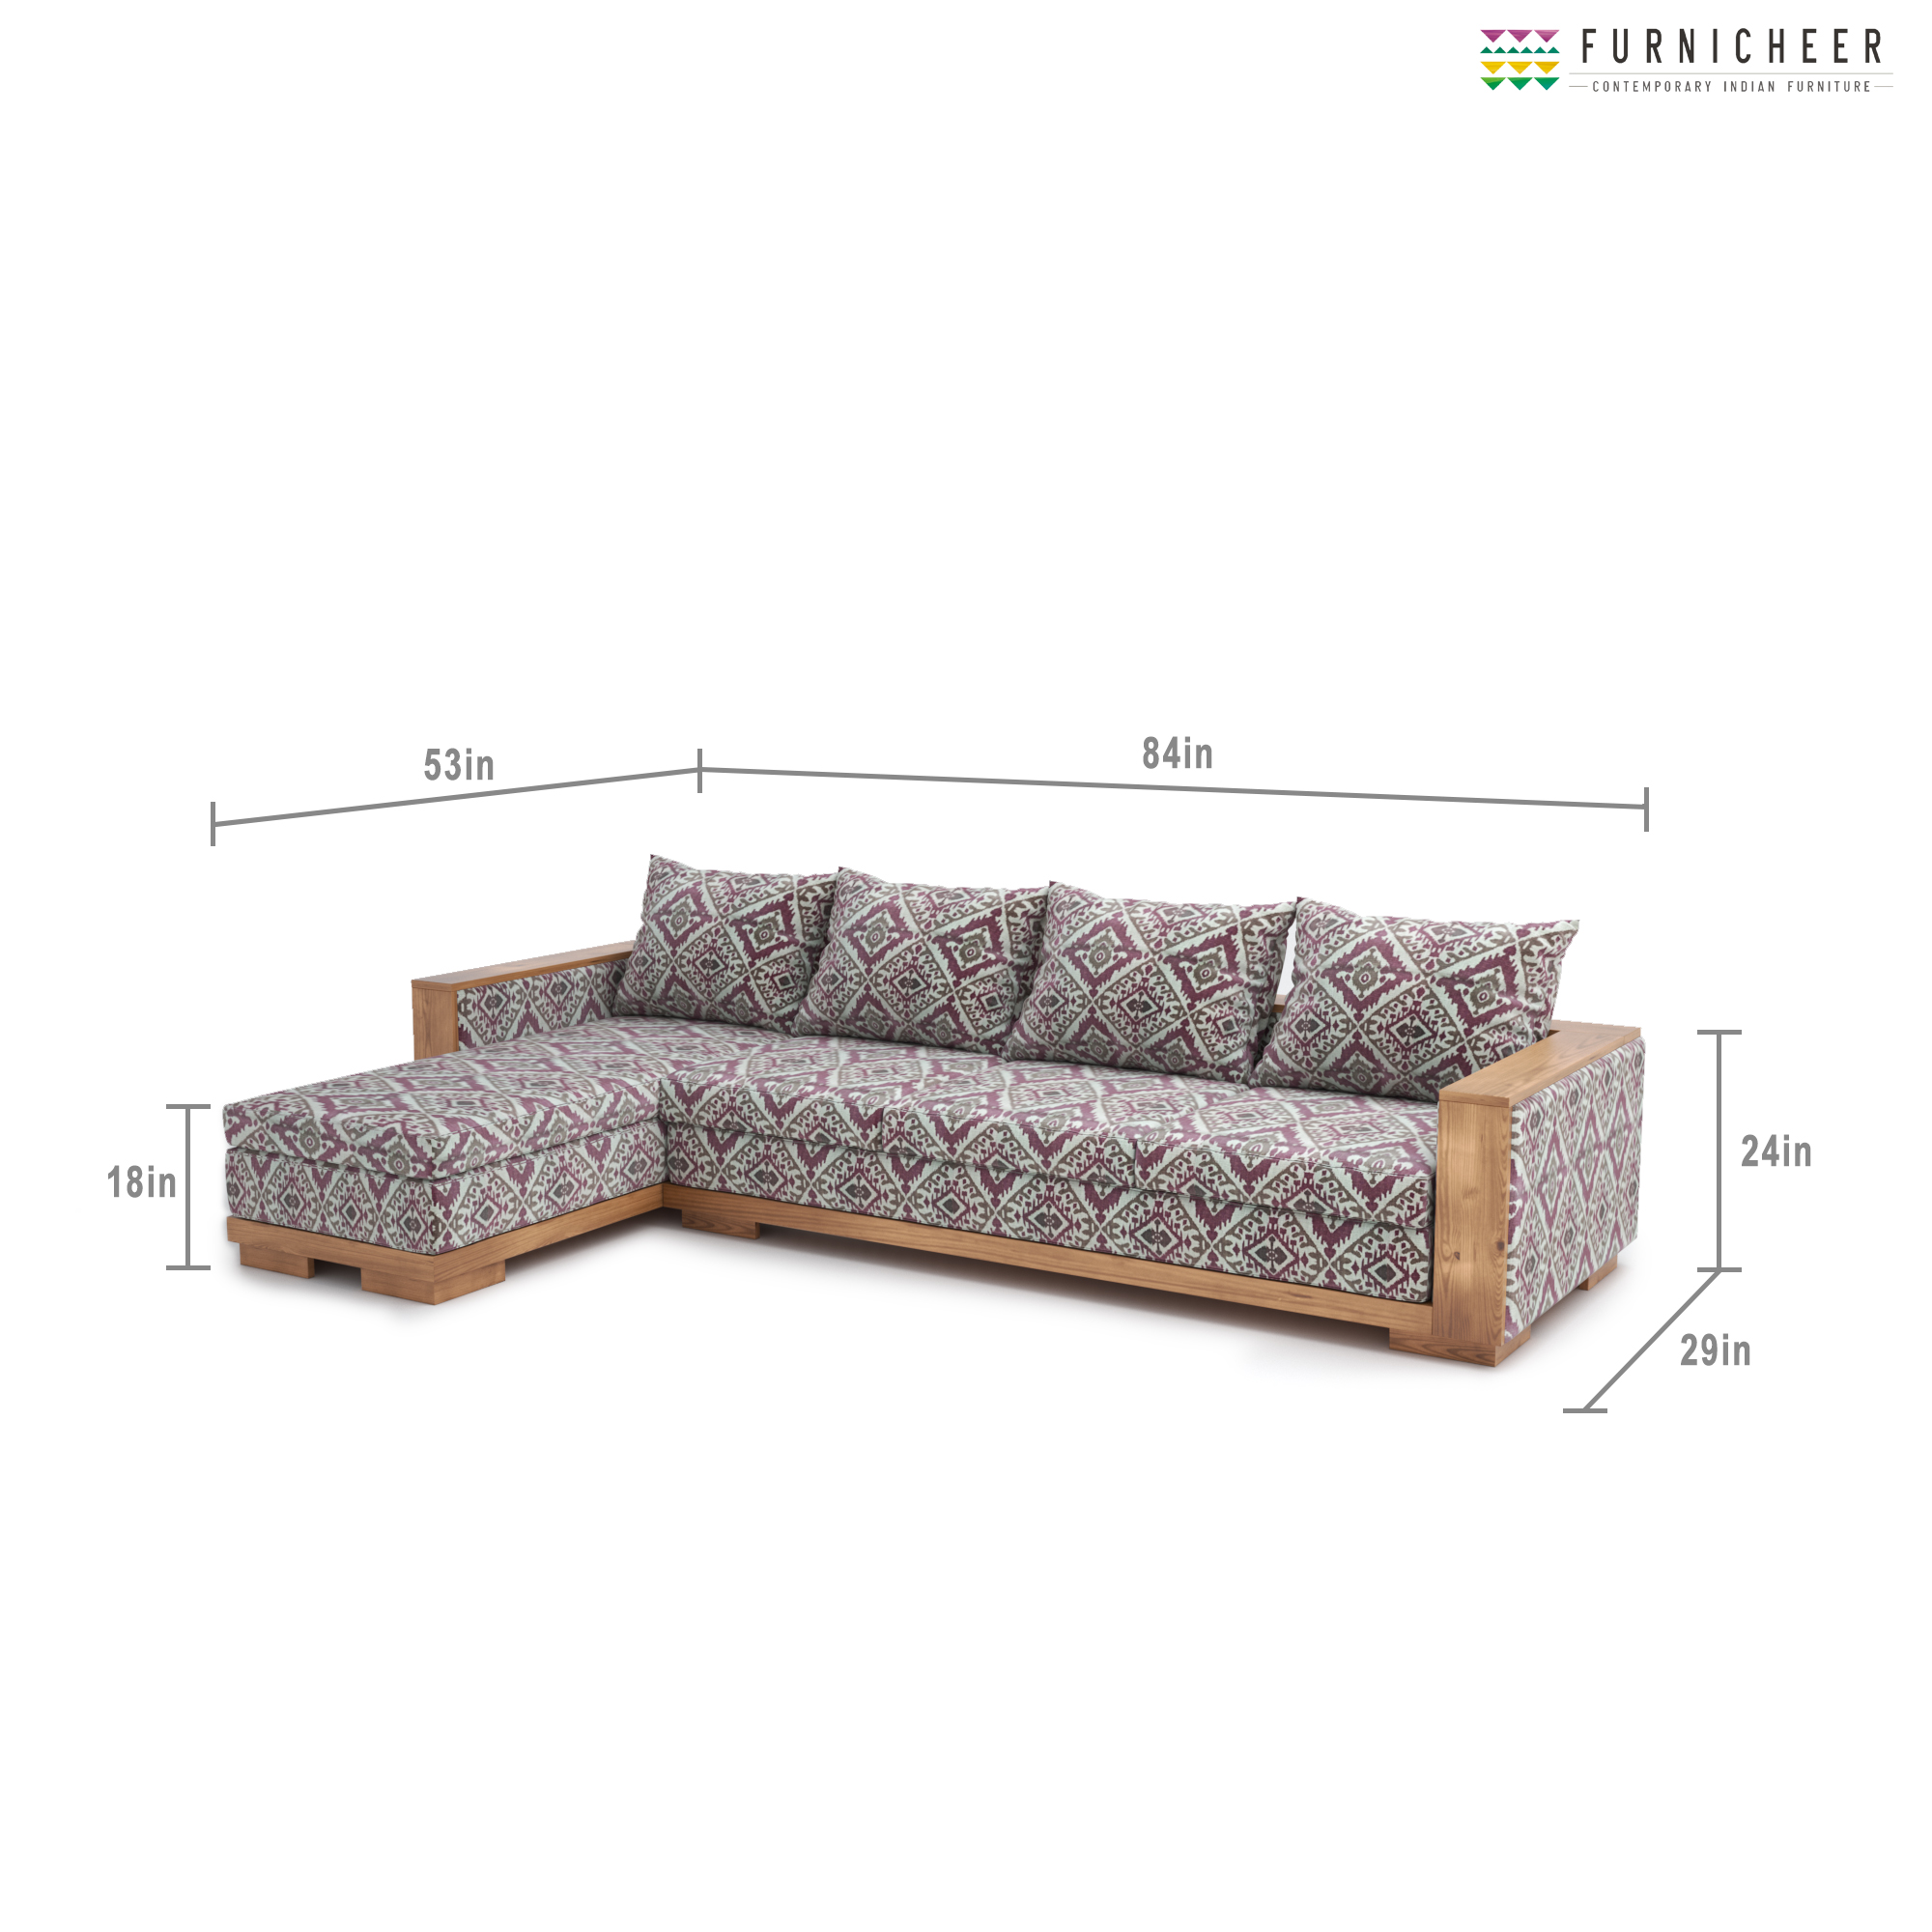 L shape sofa measurement_2